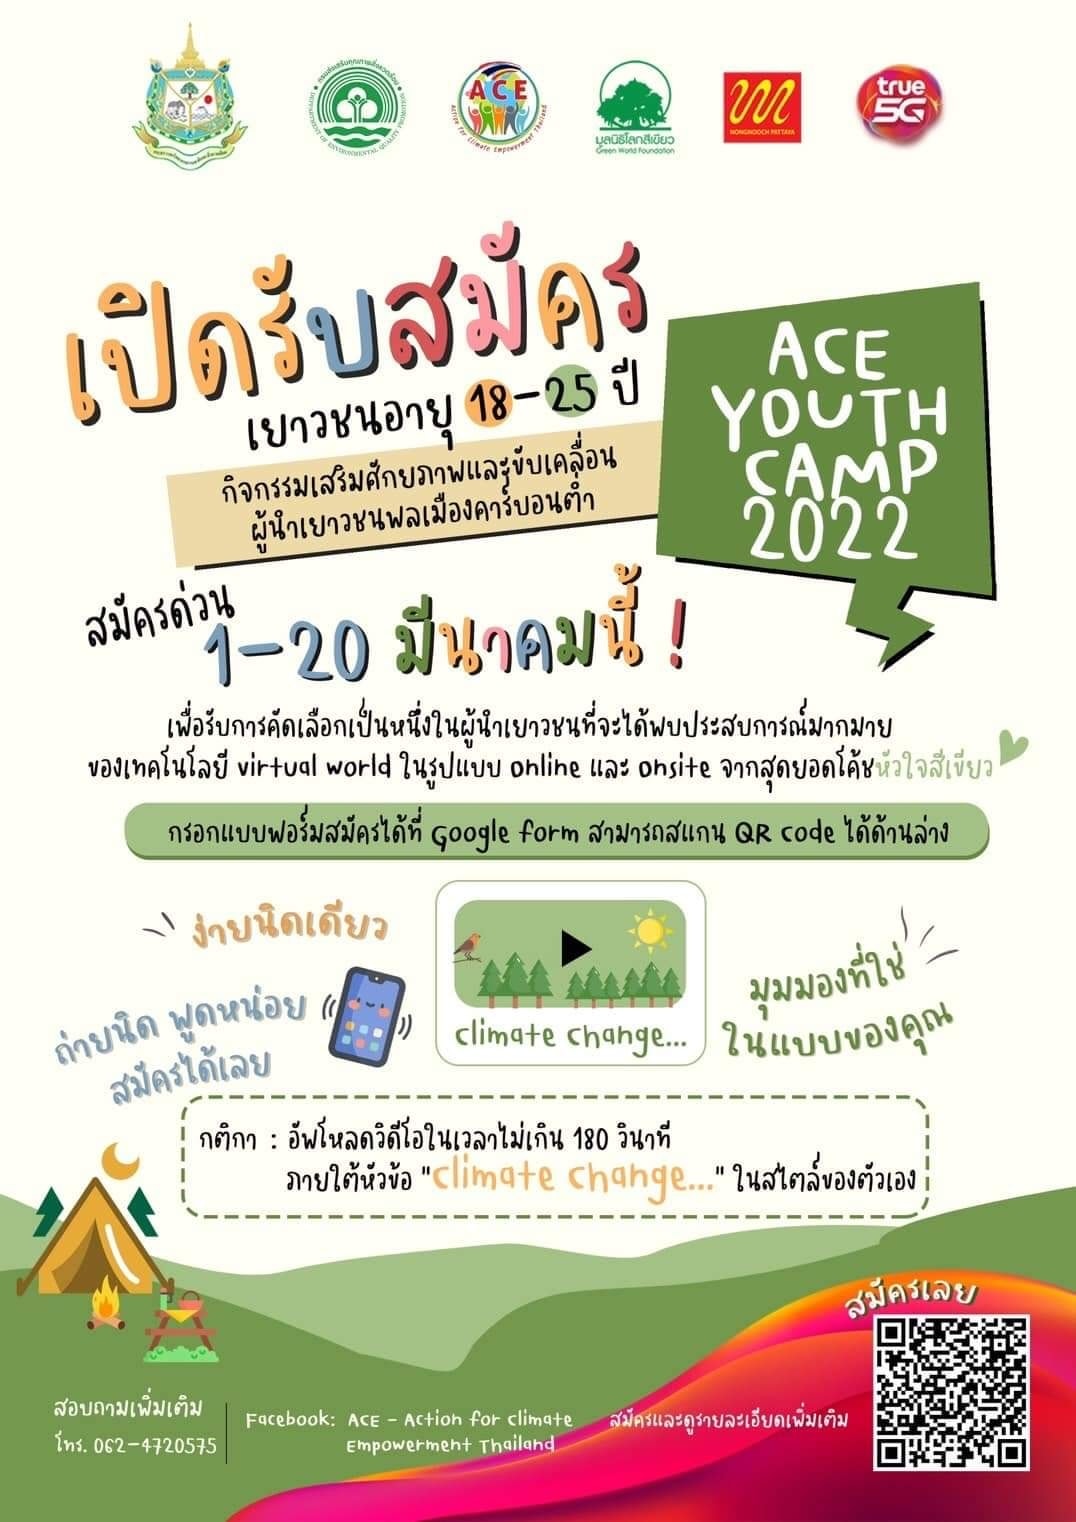 ACE Youth Camp 2022 โดย กระทรวงทรัพยากรธรรมชาติและสิ่งแวดล้อม